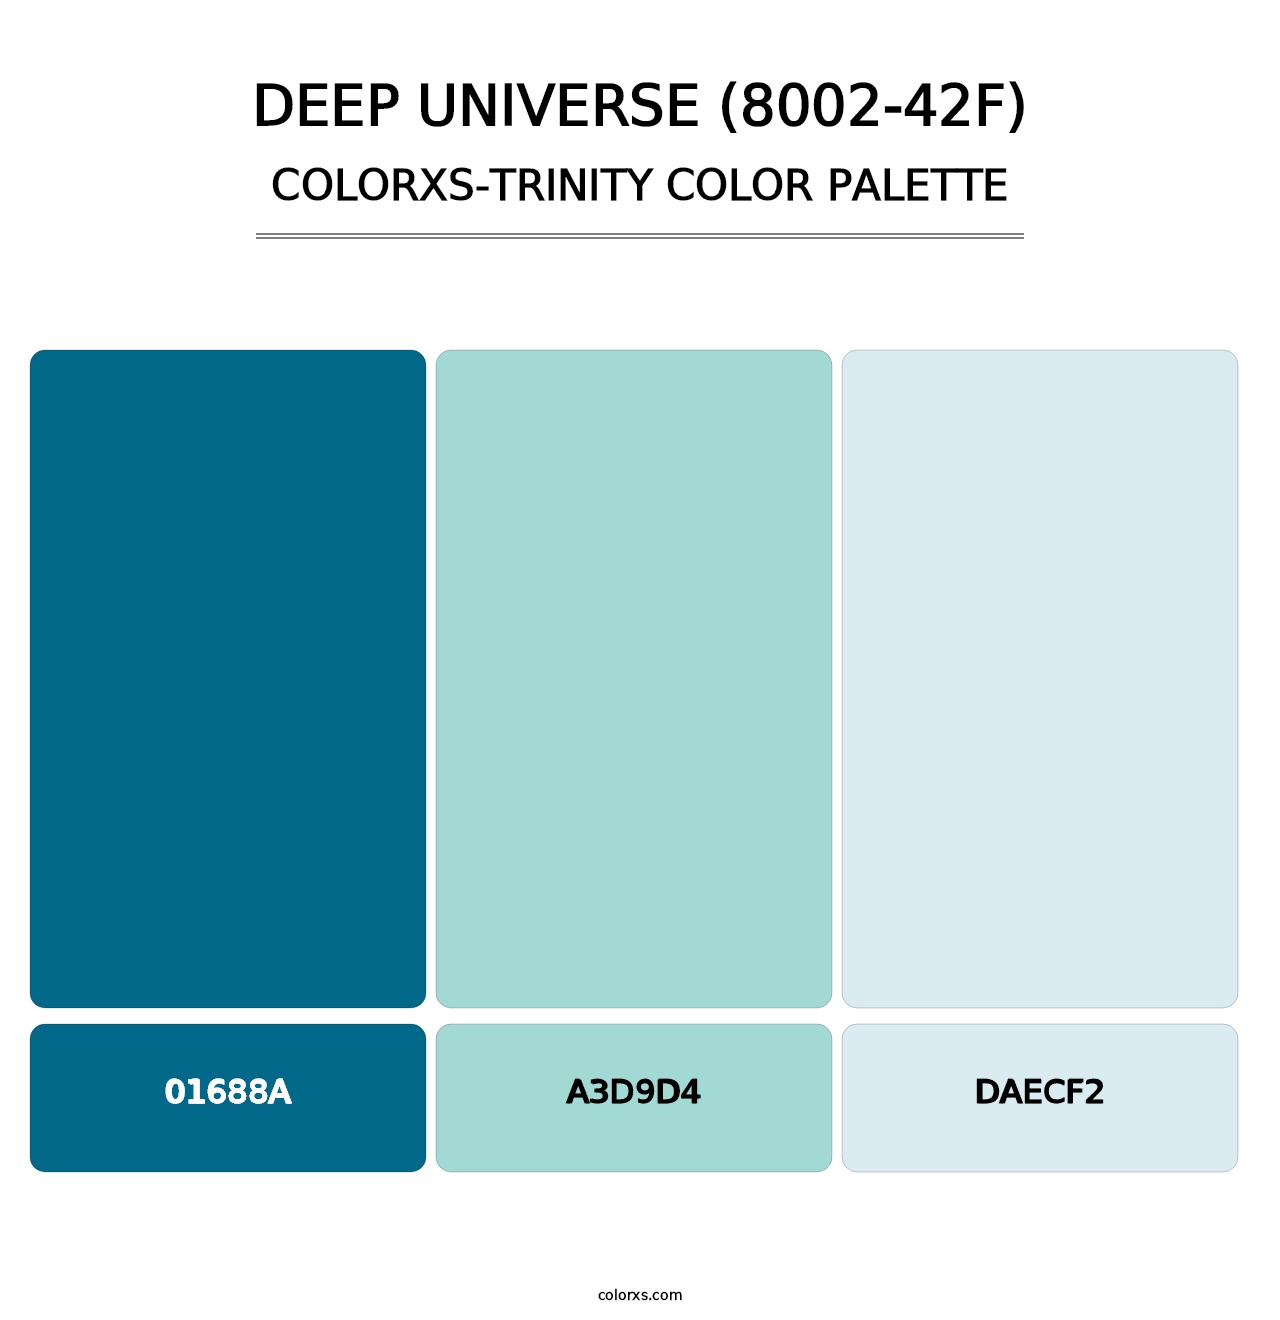 Deep Universe (8002-42F) - Colorxs Trinity Palette